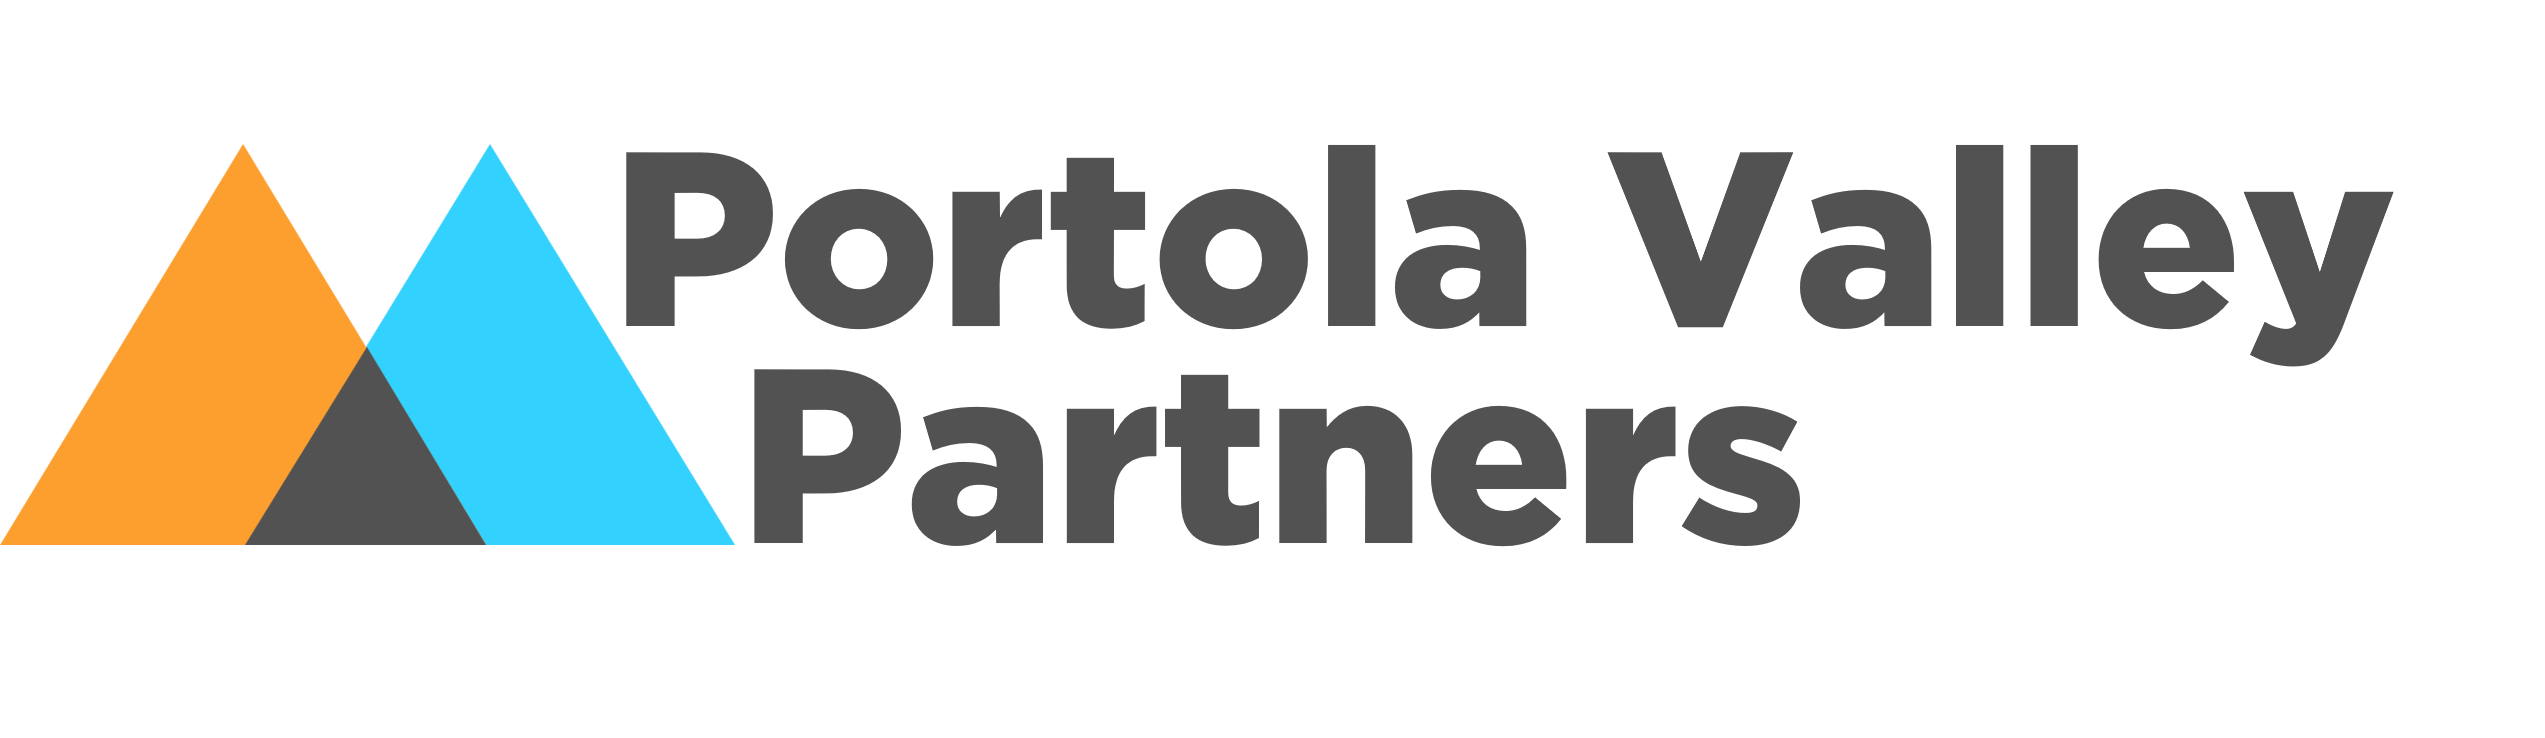 Portola Valley Partners Logo